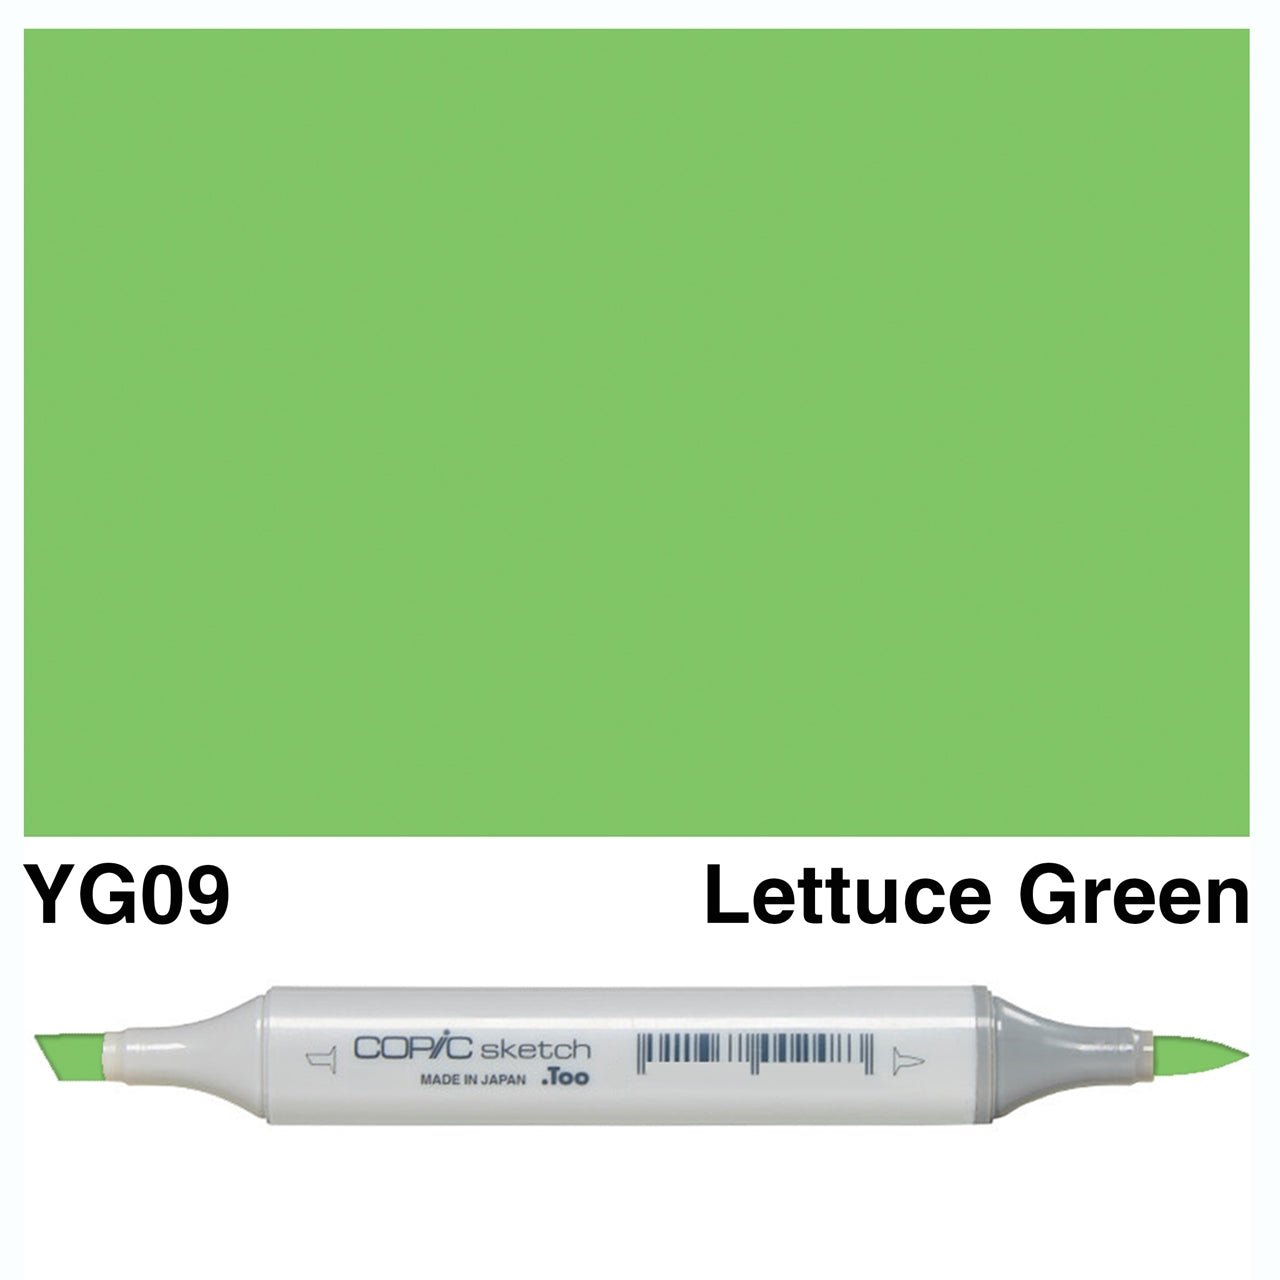 Copic Sketch YG09 Lettuce Green - theartshop.com.au